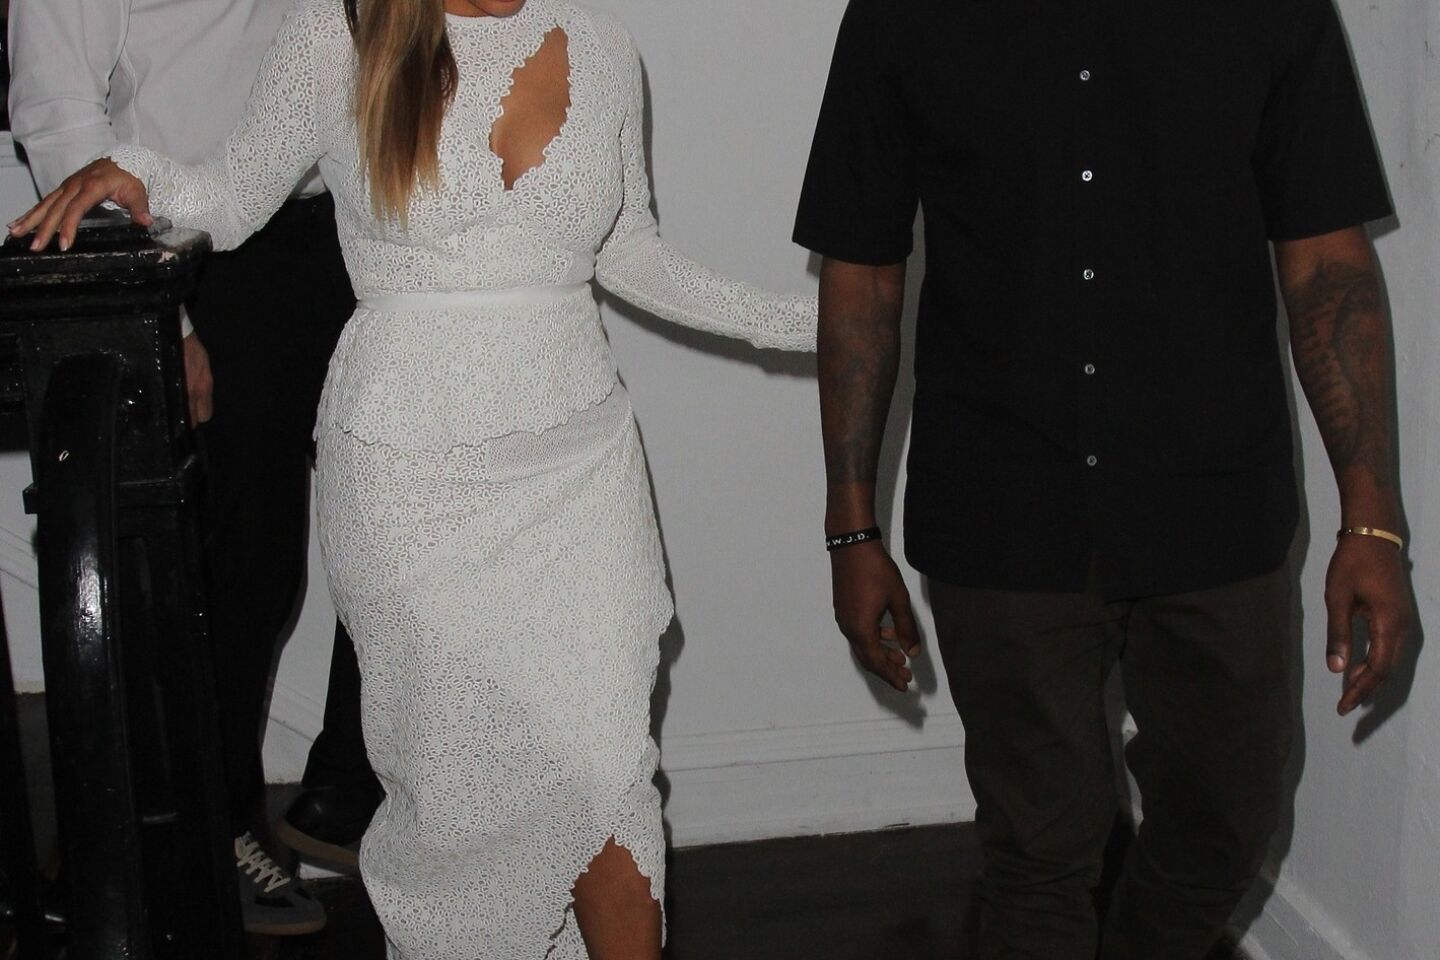 Kanye West and Kim Kardashian attend DuJour Magazine's event to honor artist Marc Quinn at Delano Beach Club on Dec. 4, 2013, in Miami Beach.